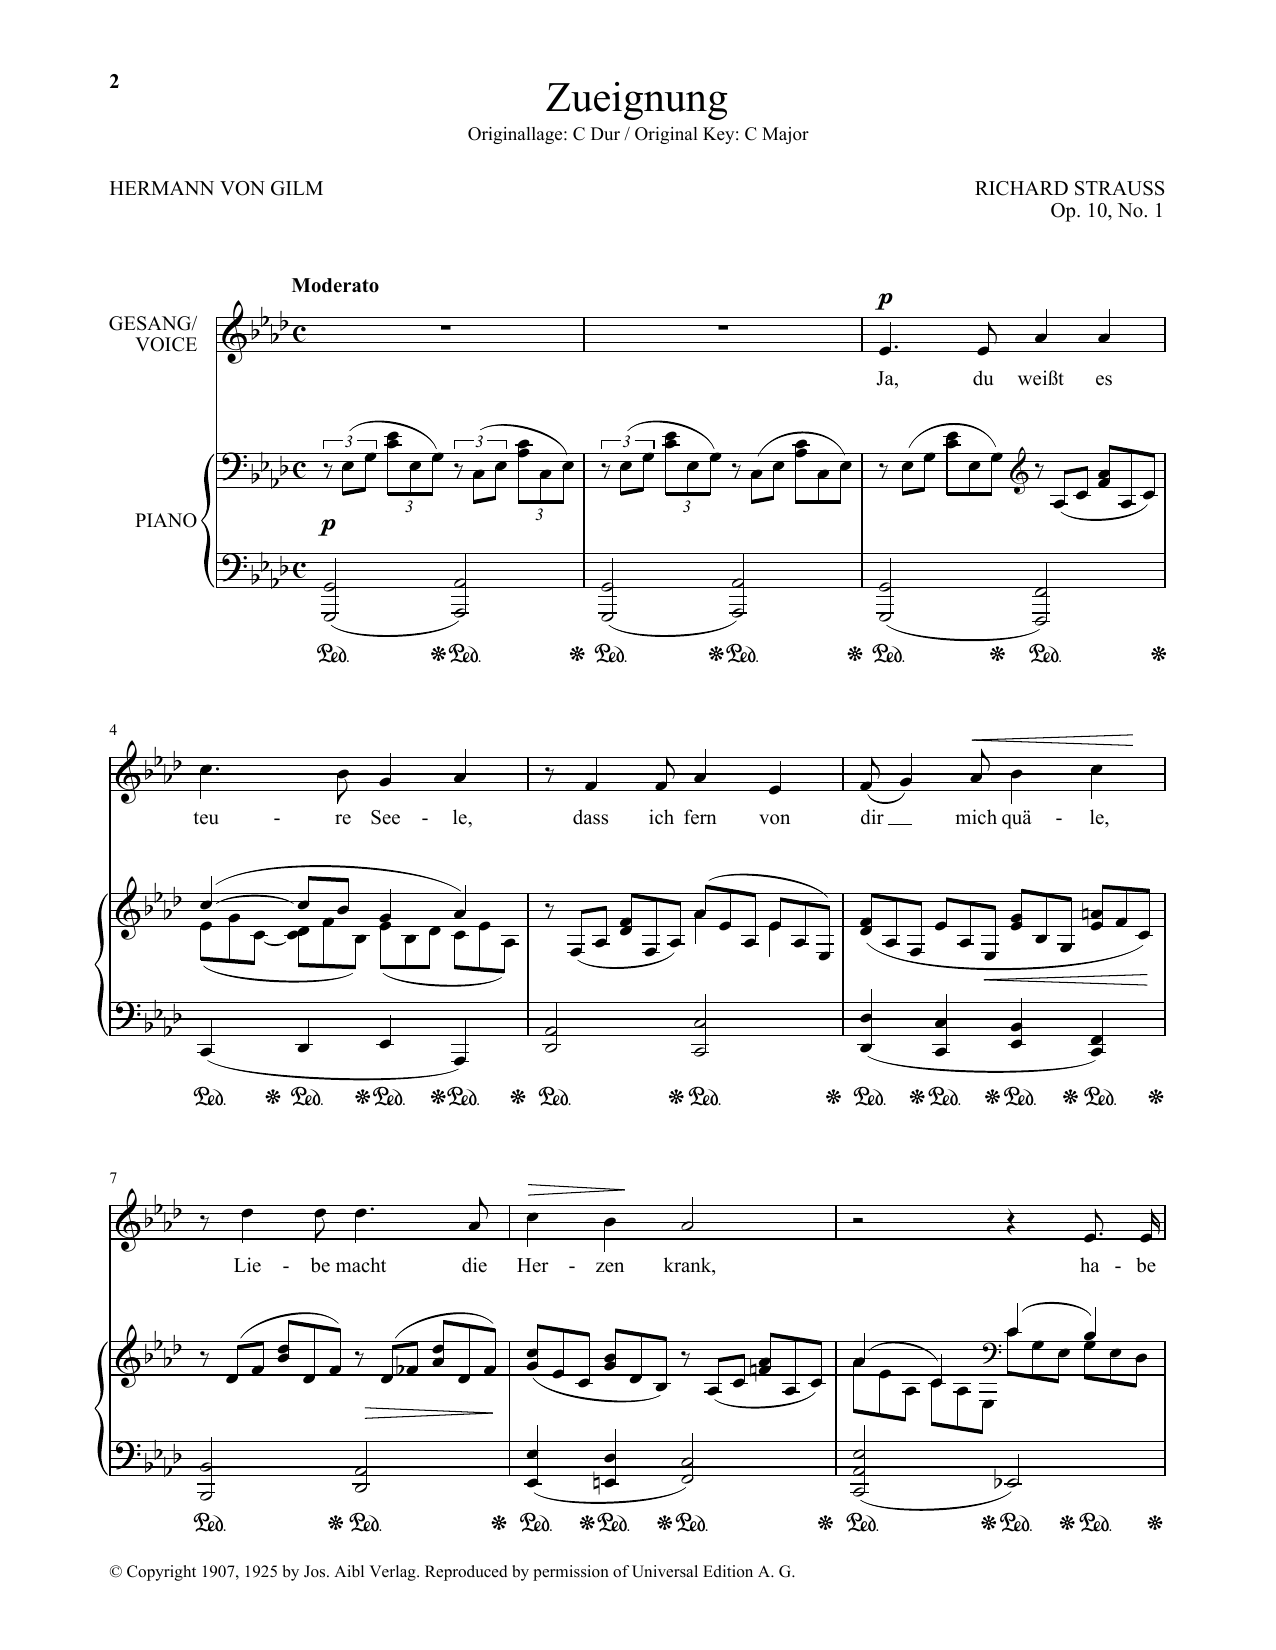 Download Richard Strauss Zueignung (Op. 10, No. 1) (Low Voice) Sheet Music